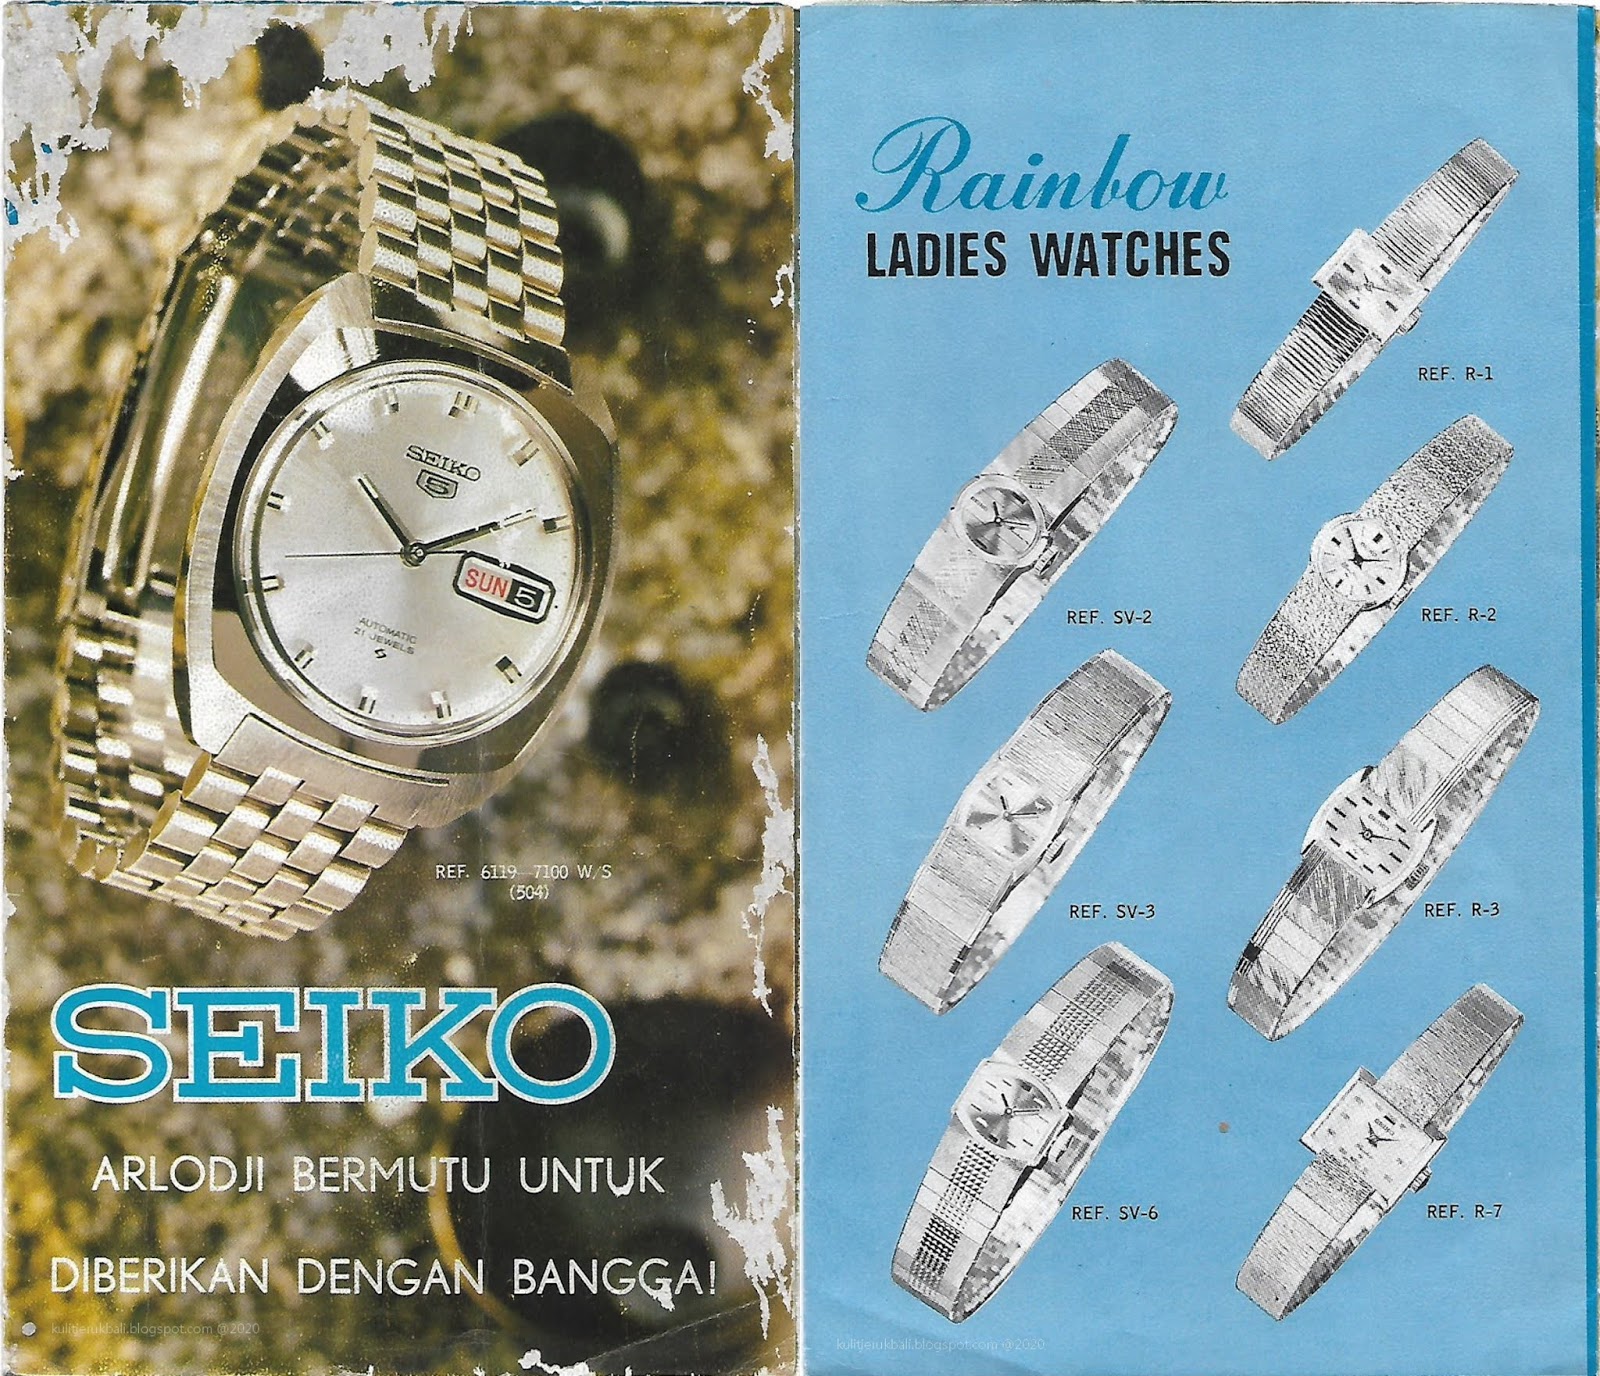 Hobiku! Hobimu?': 1968 Seiko Brochure/Catalog for Indonesian Market